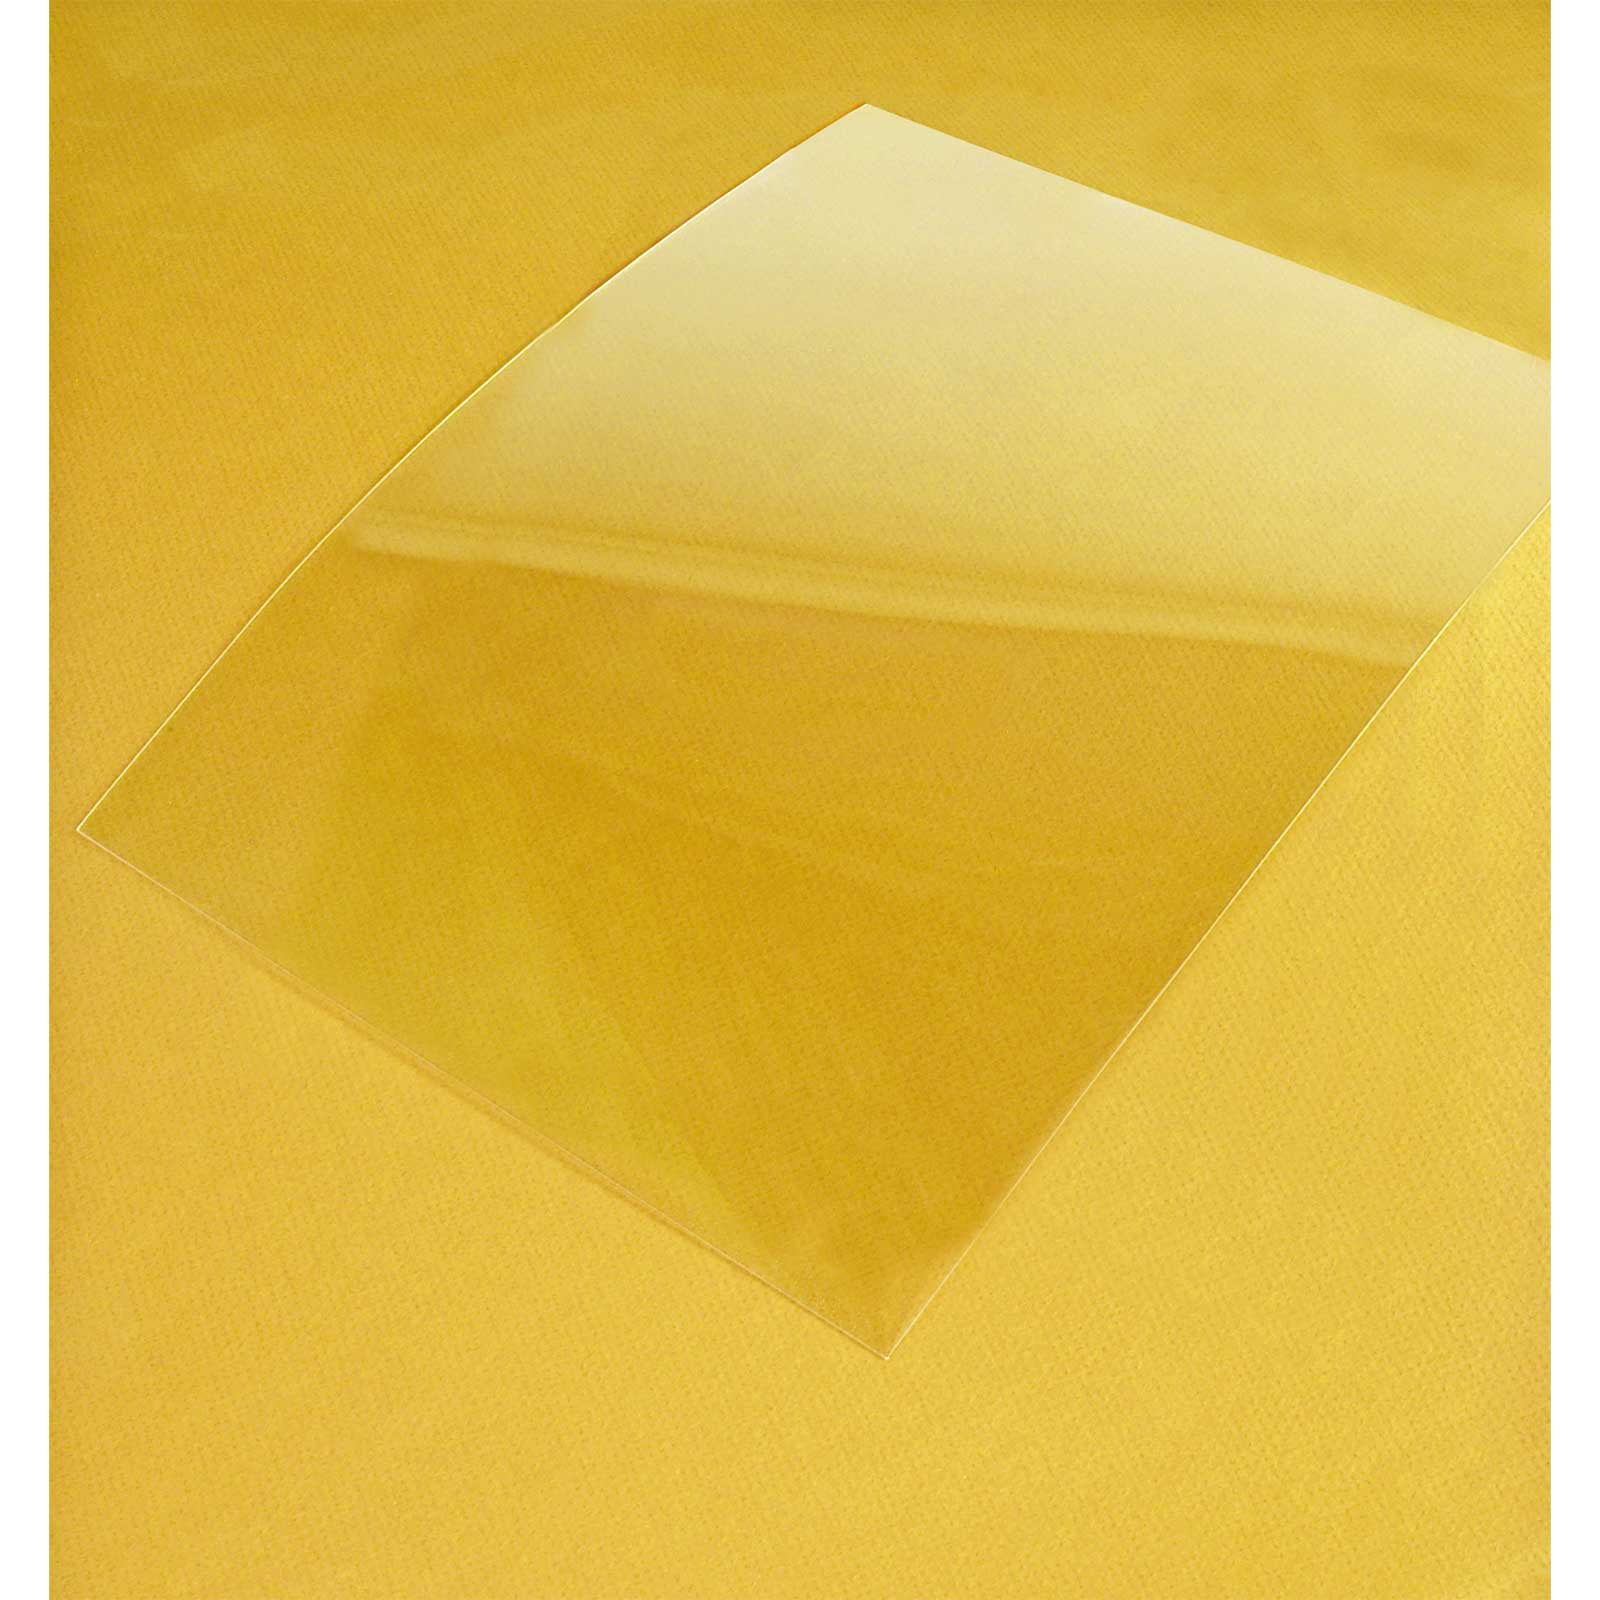 Polycarbonate Plastic Sheet